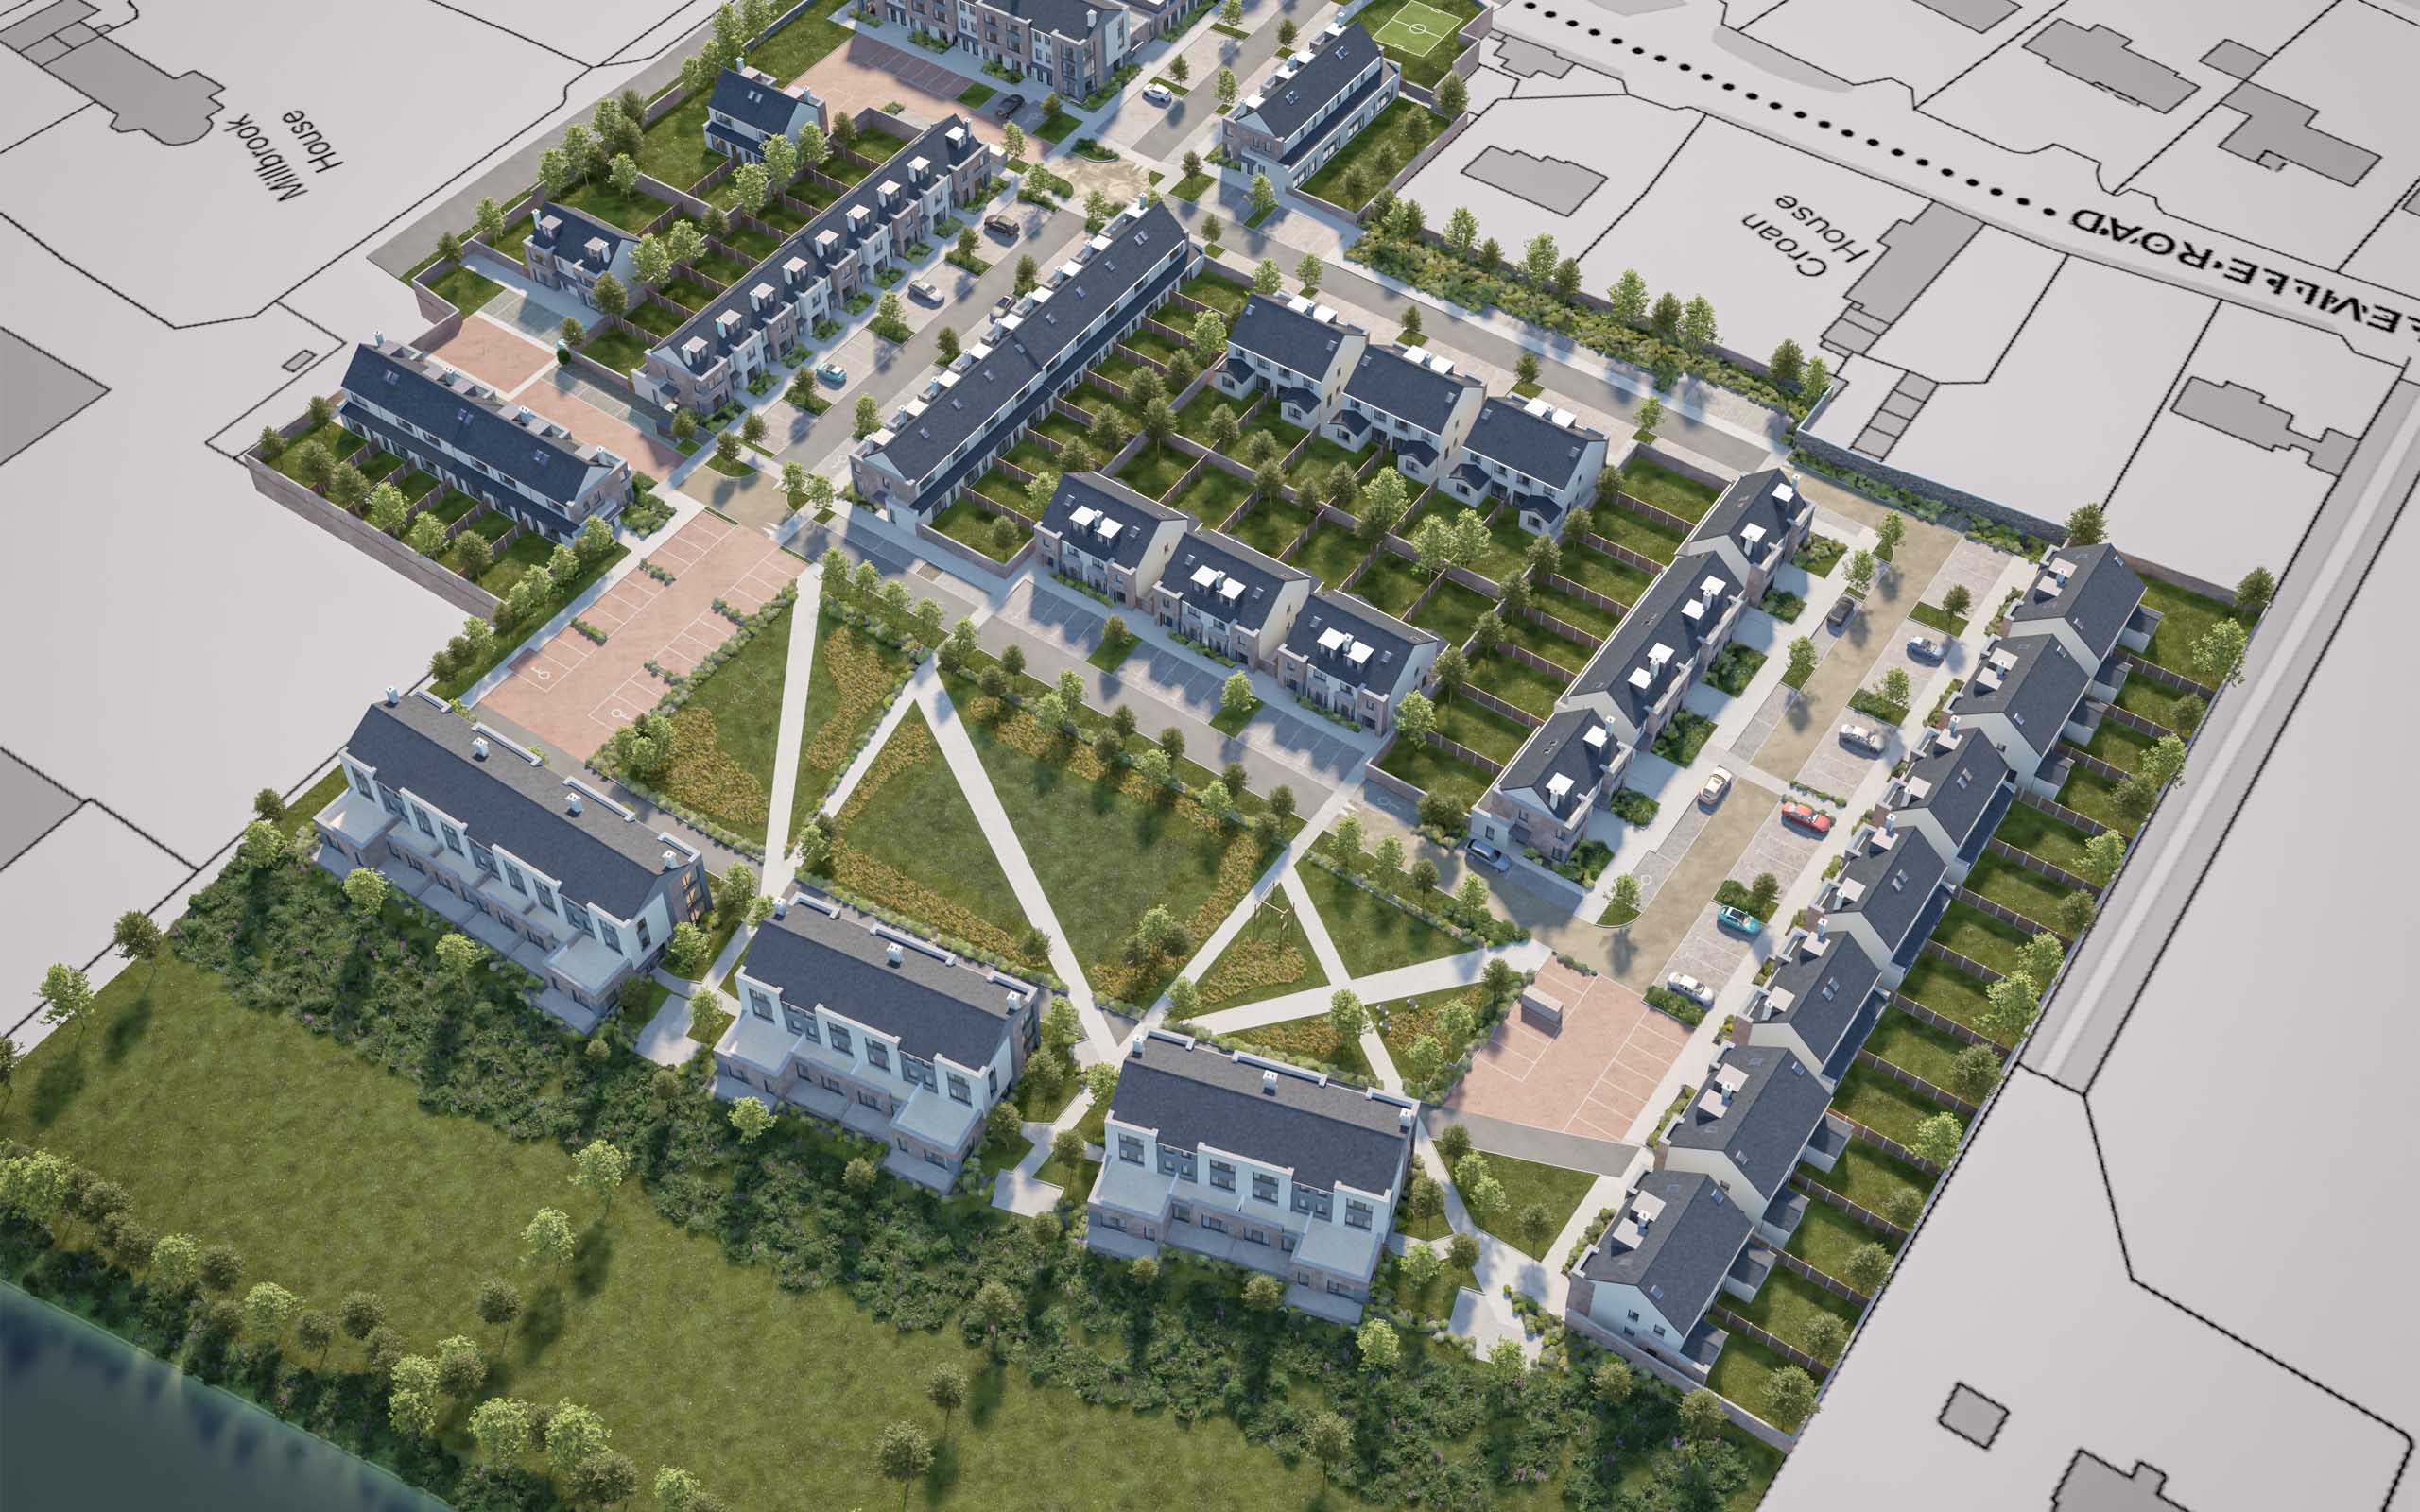 3D Site Plans of Residential Development